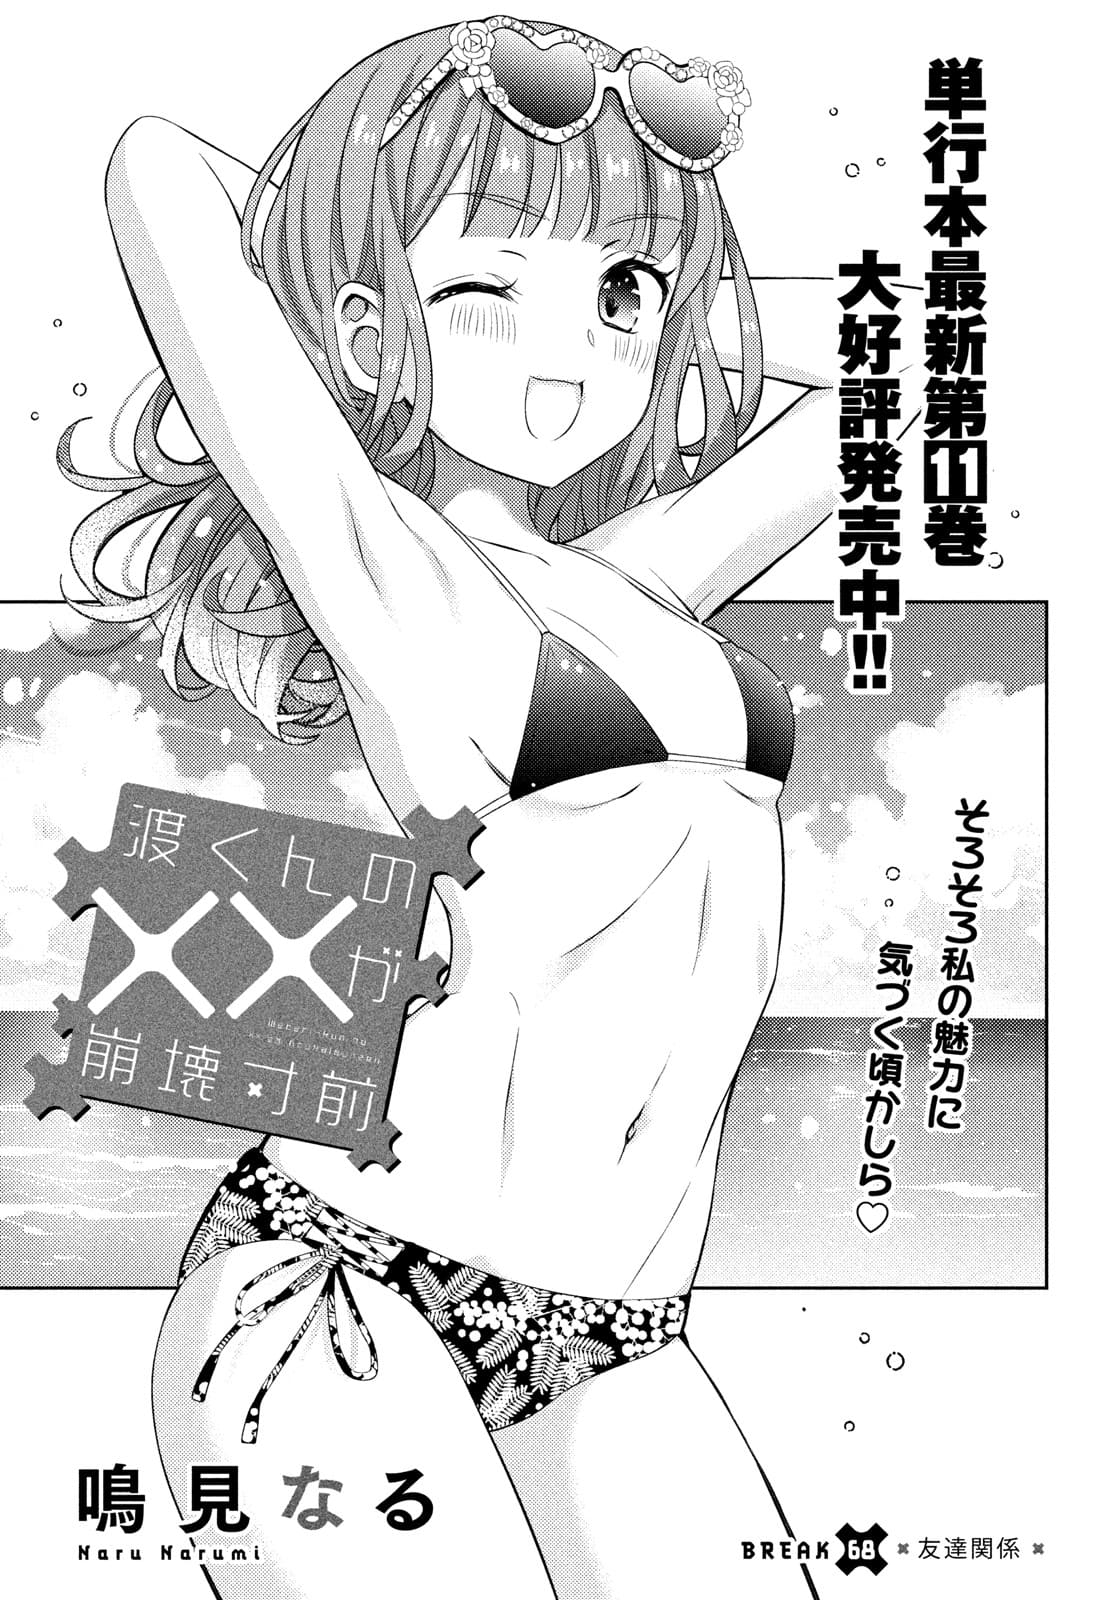 Watari-kun no xx ga Houkai Sunzen - Chapter 68 - Page 3